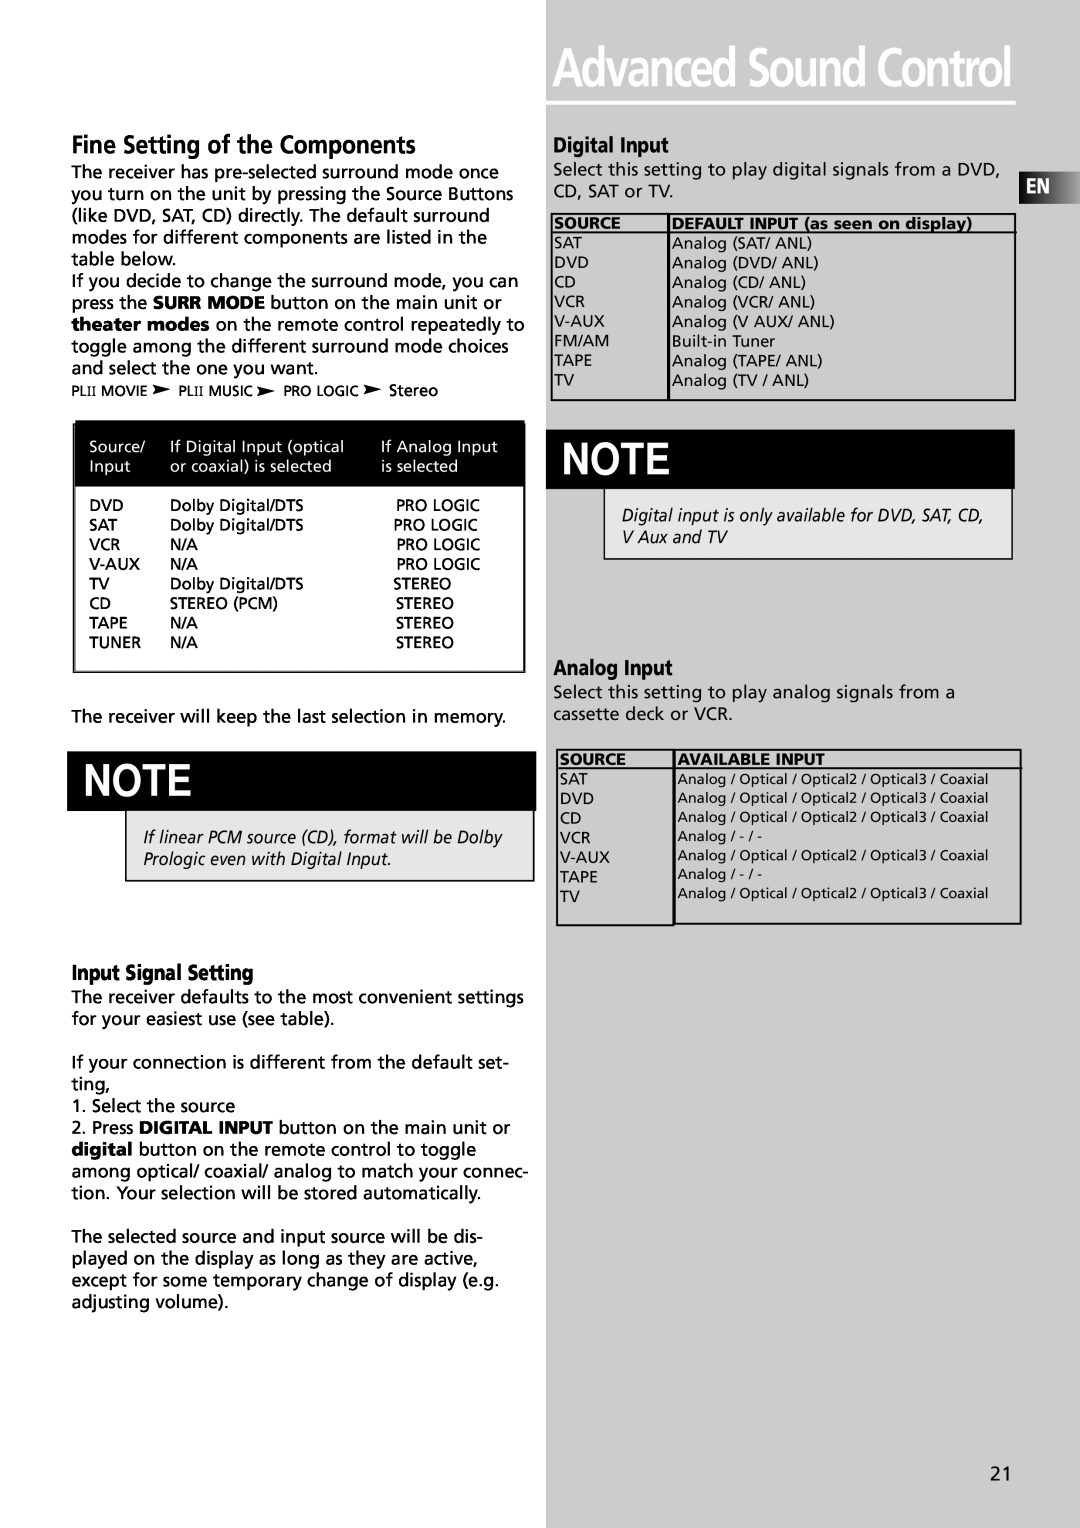 Technicolor - Thomson DPL4000 manual Fine Setting of the Components, Input Signal Setting, Digital Input, Analog Input 